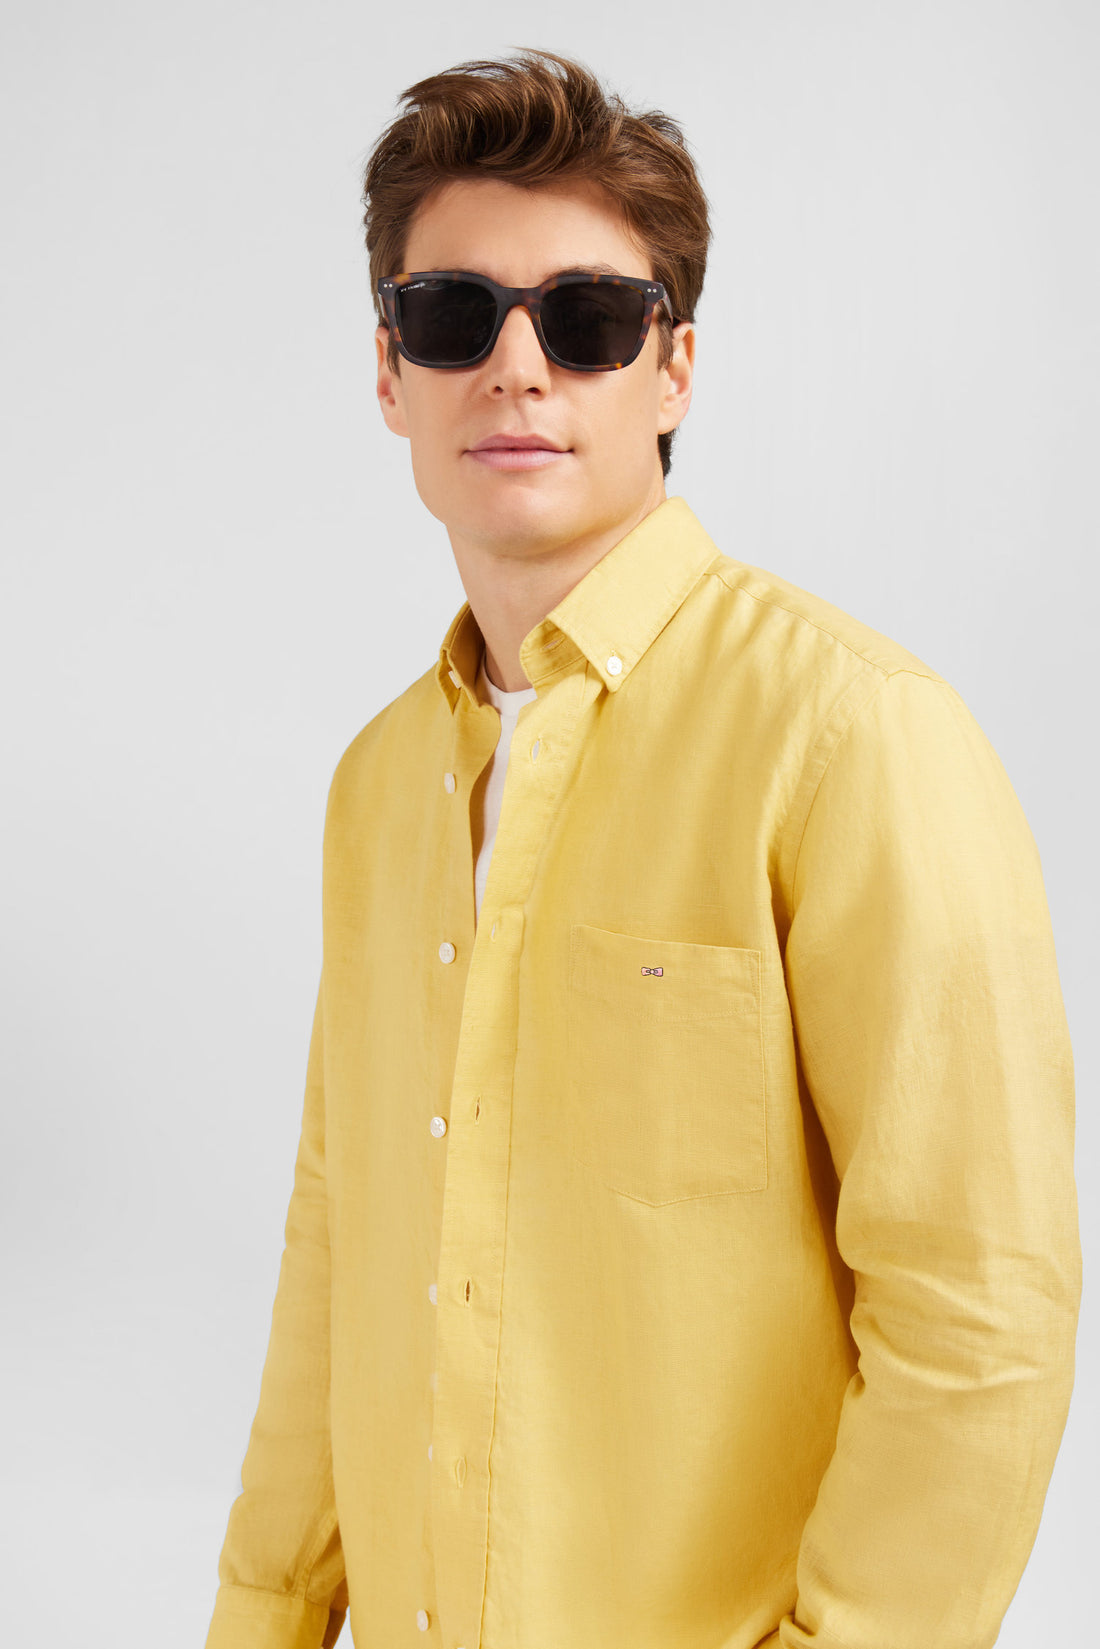 Plain Yellow Linen Shirt_E24Checl0005_Jac9_02